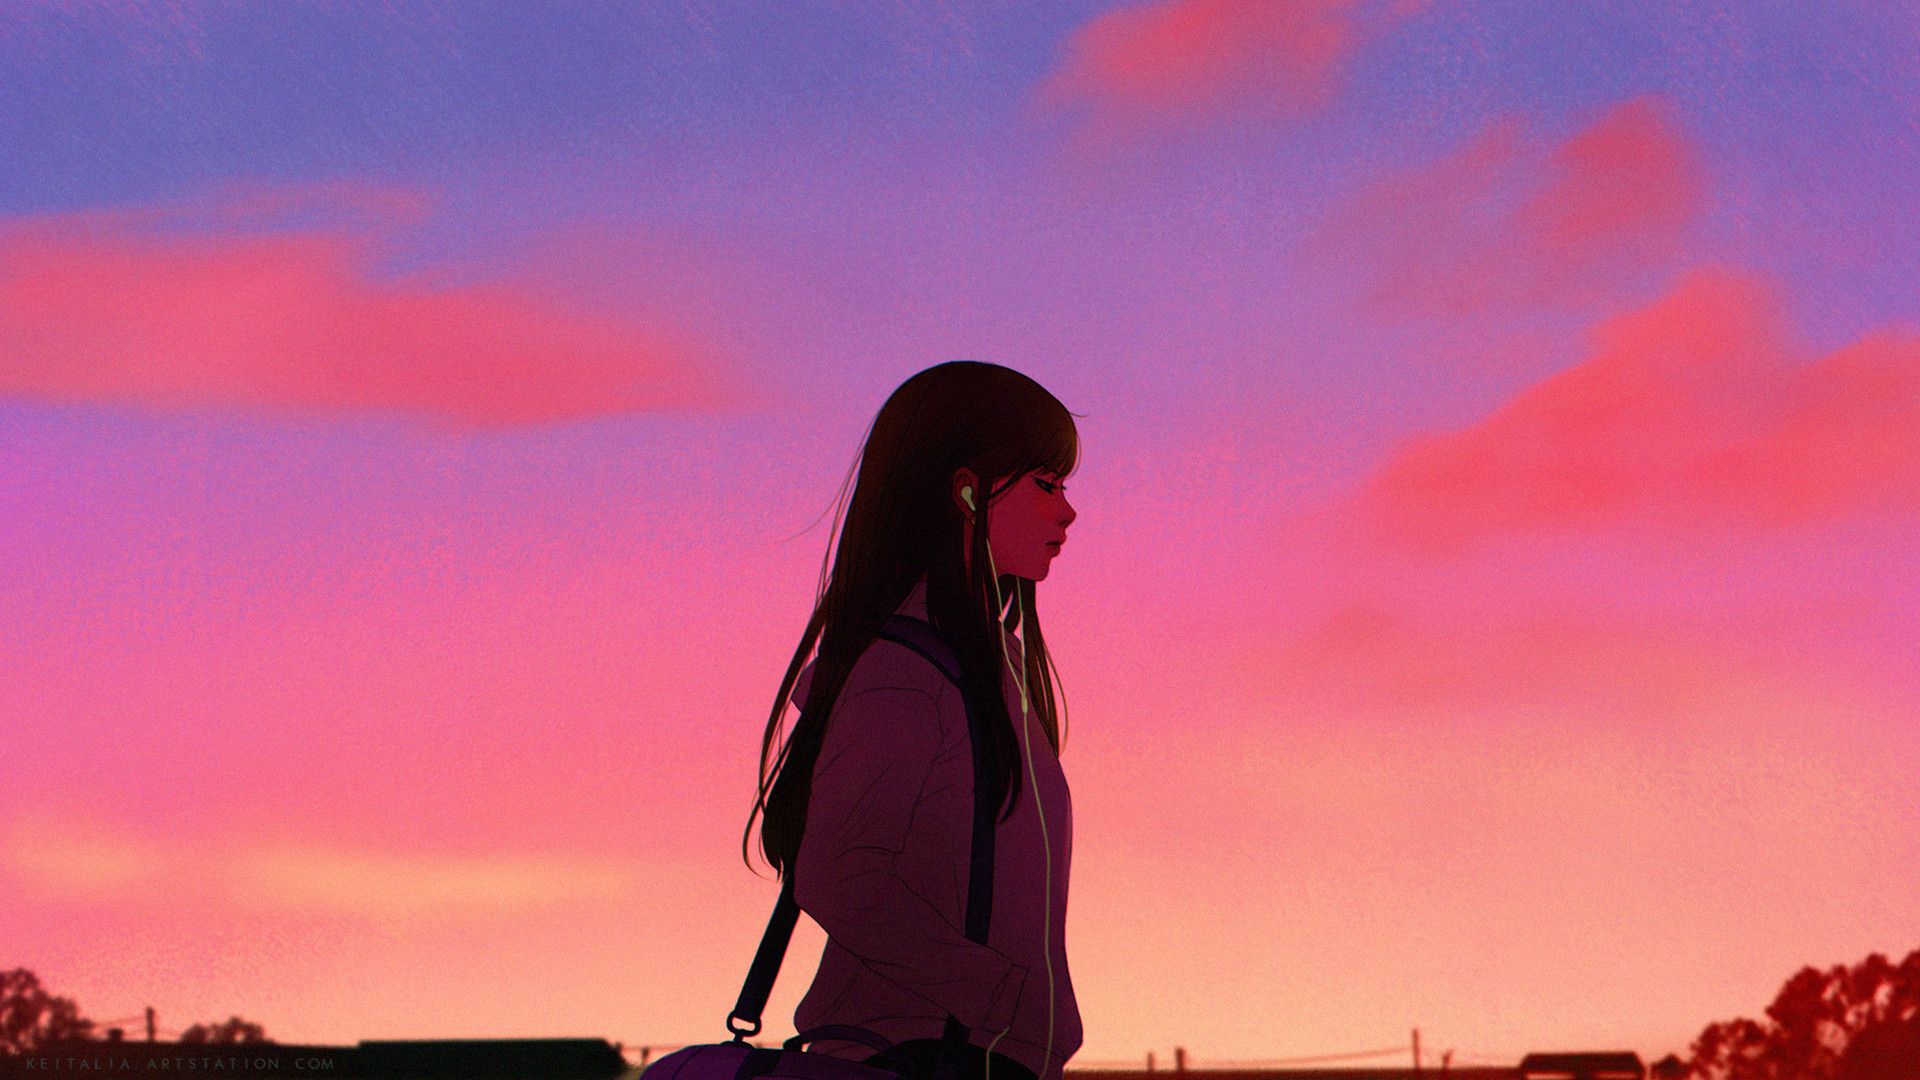 Anime Girl Listening Music Wallpaper, HD Anime 4K Wallpaper, Image, Photo and Background